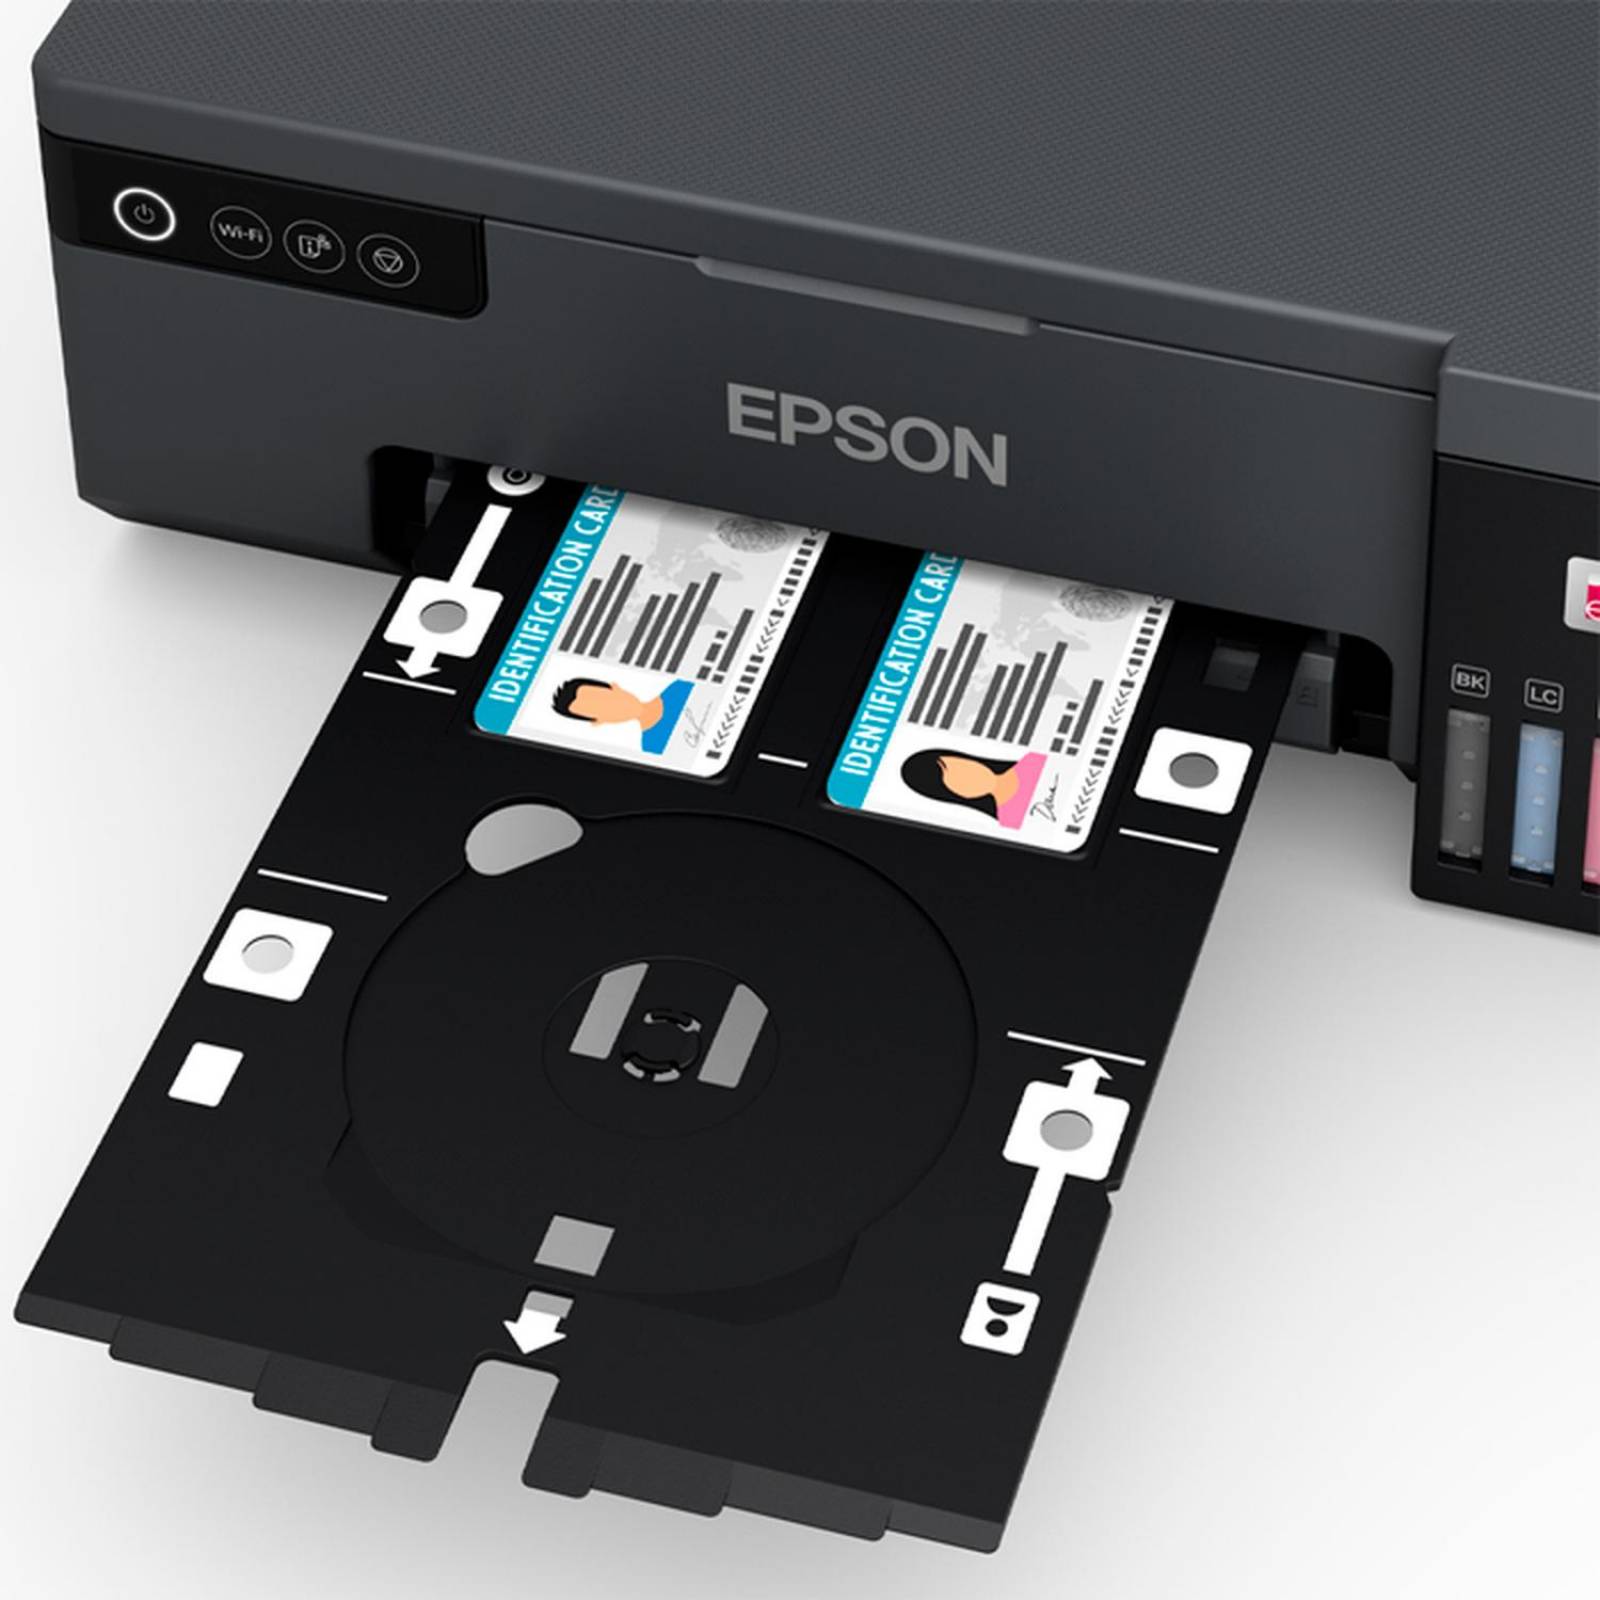 EPSON L8050, Impresora tinta a color reemplazo L805